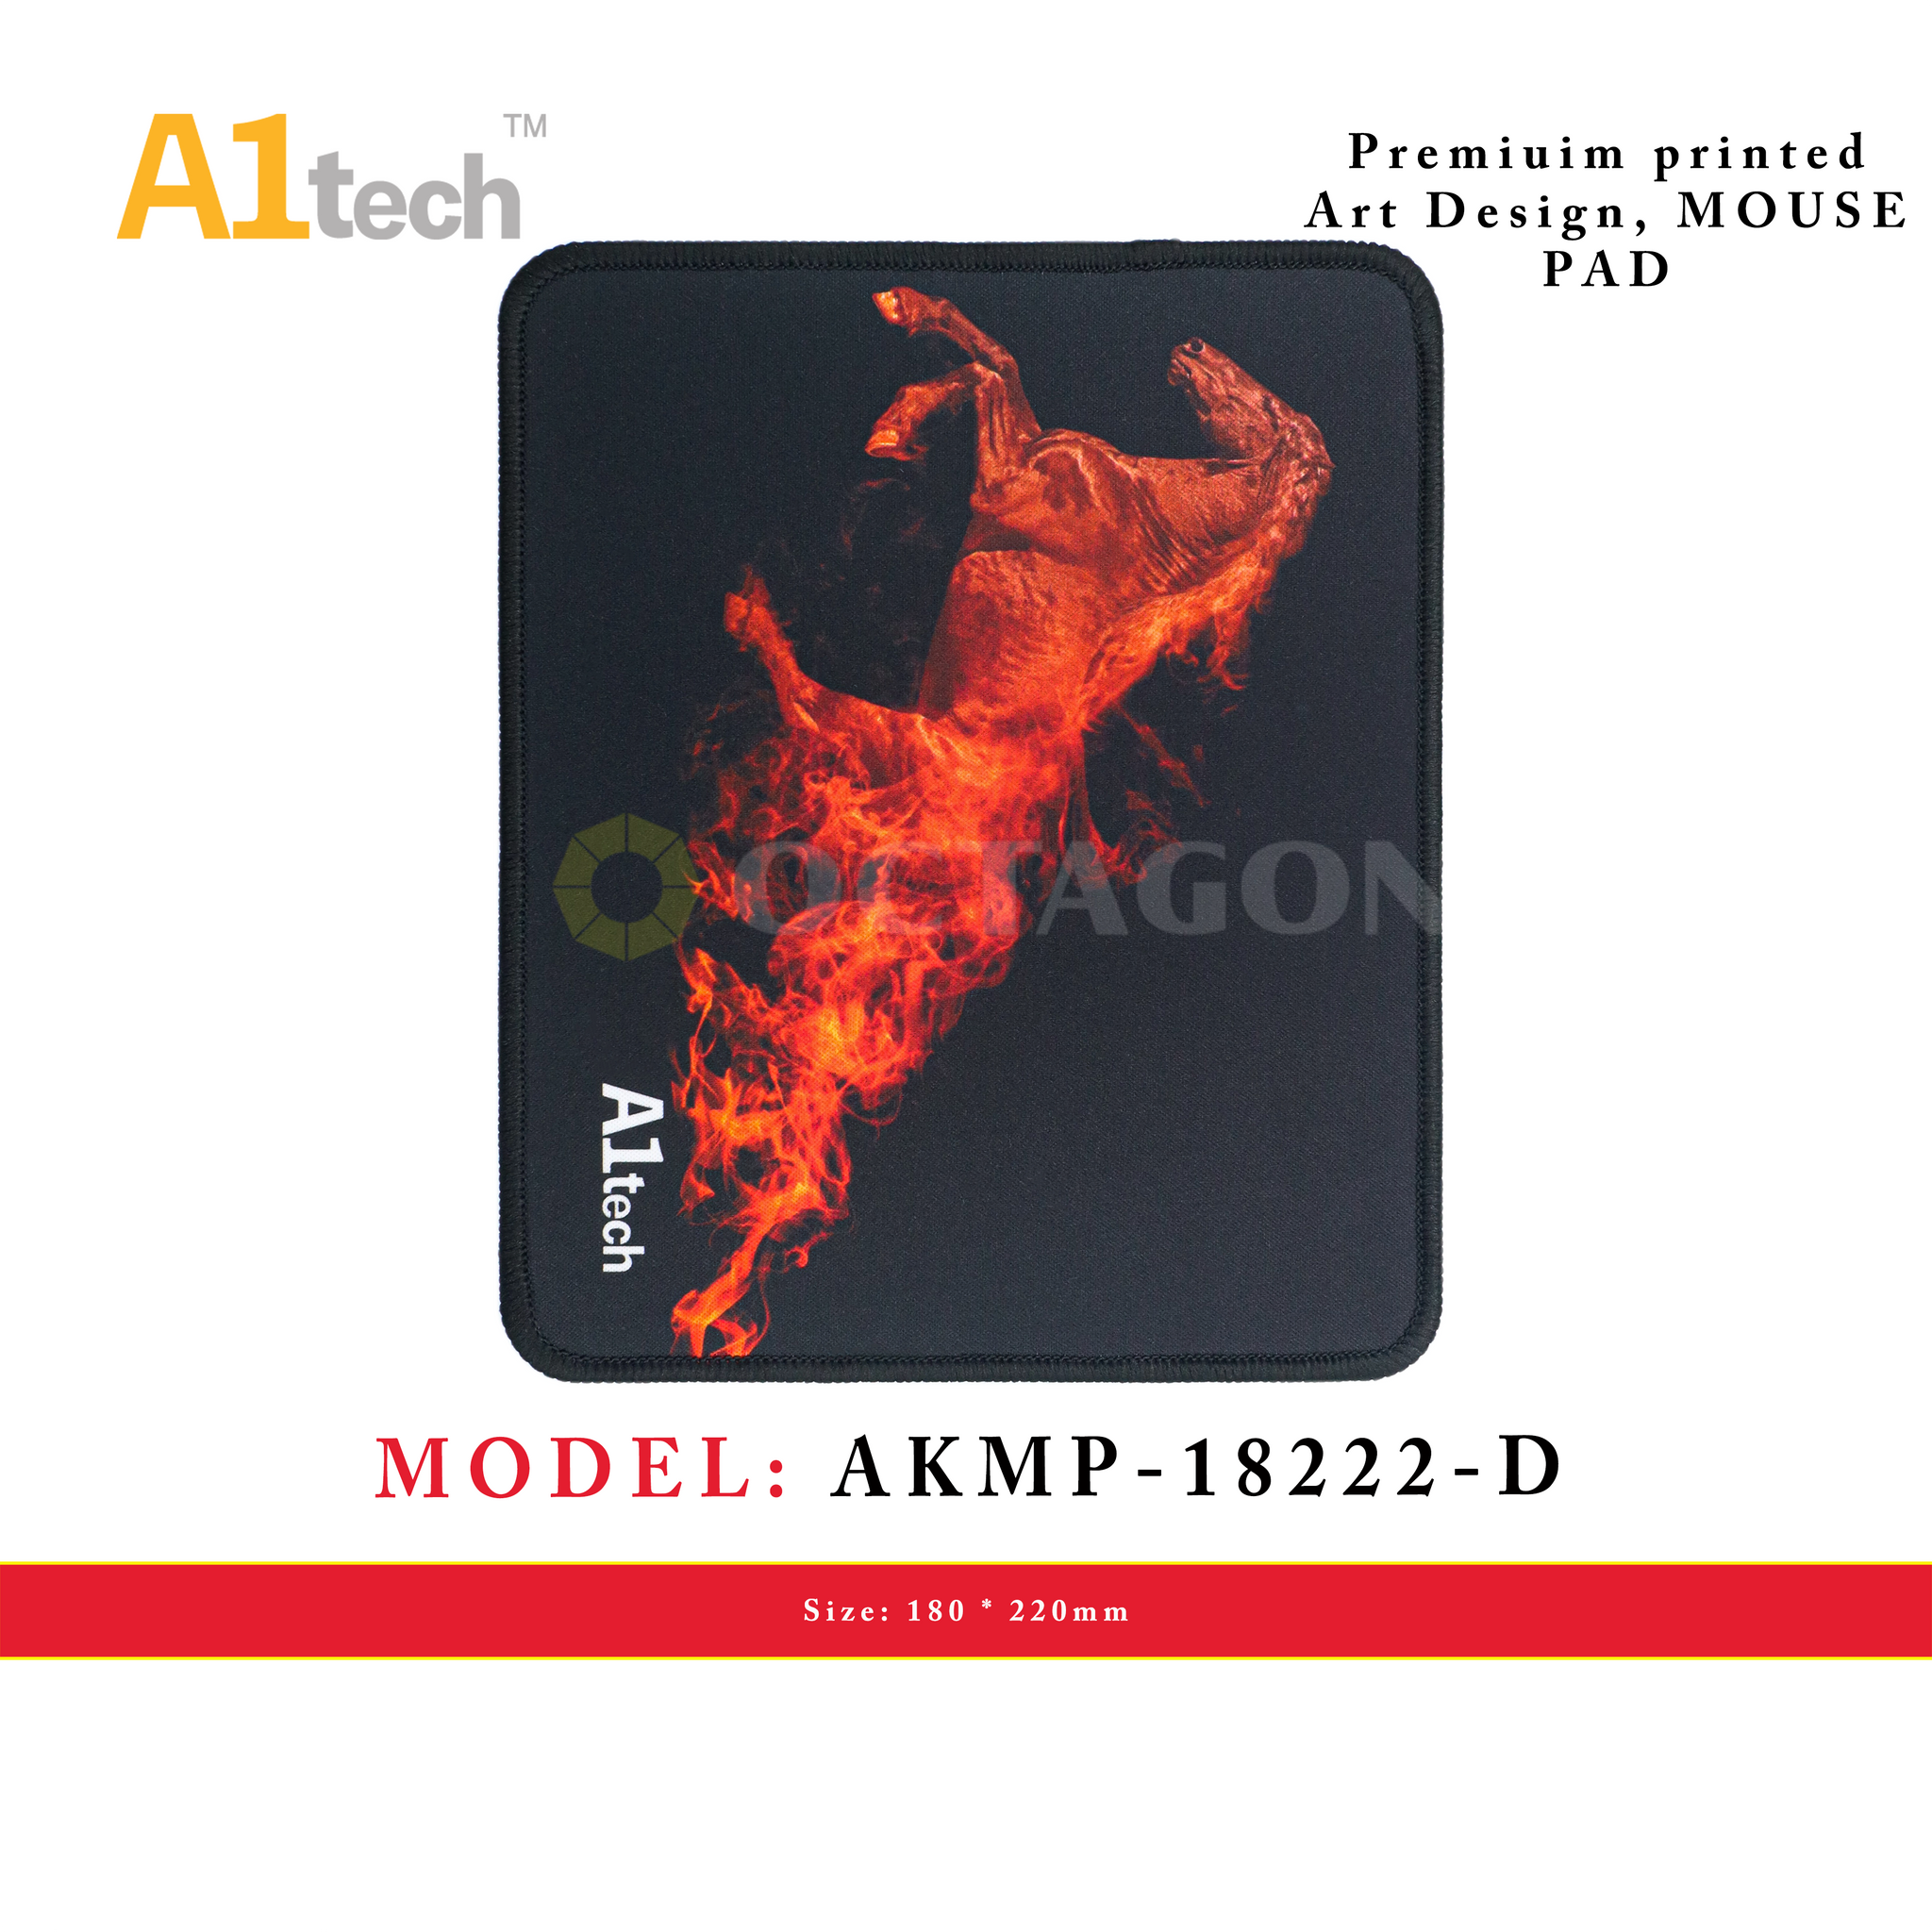 A1TECH AKMP-18222-D MOUSE PAD